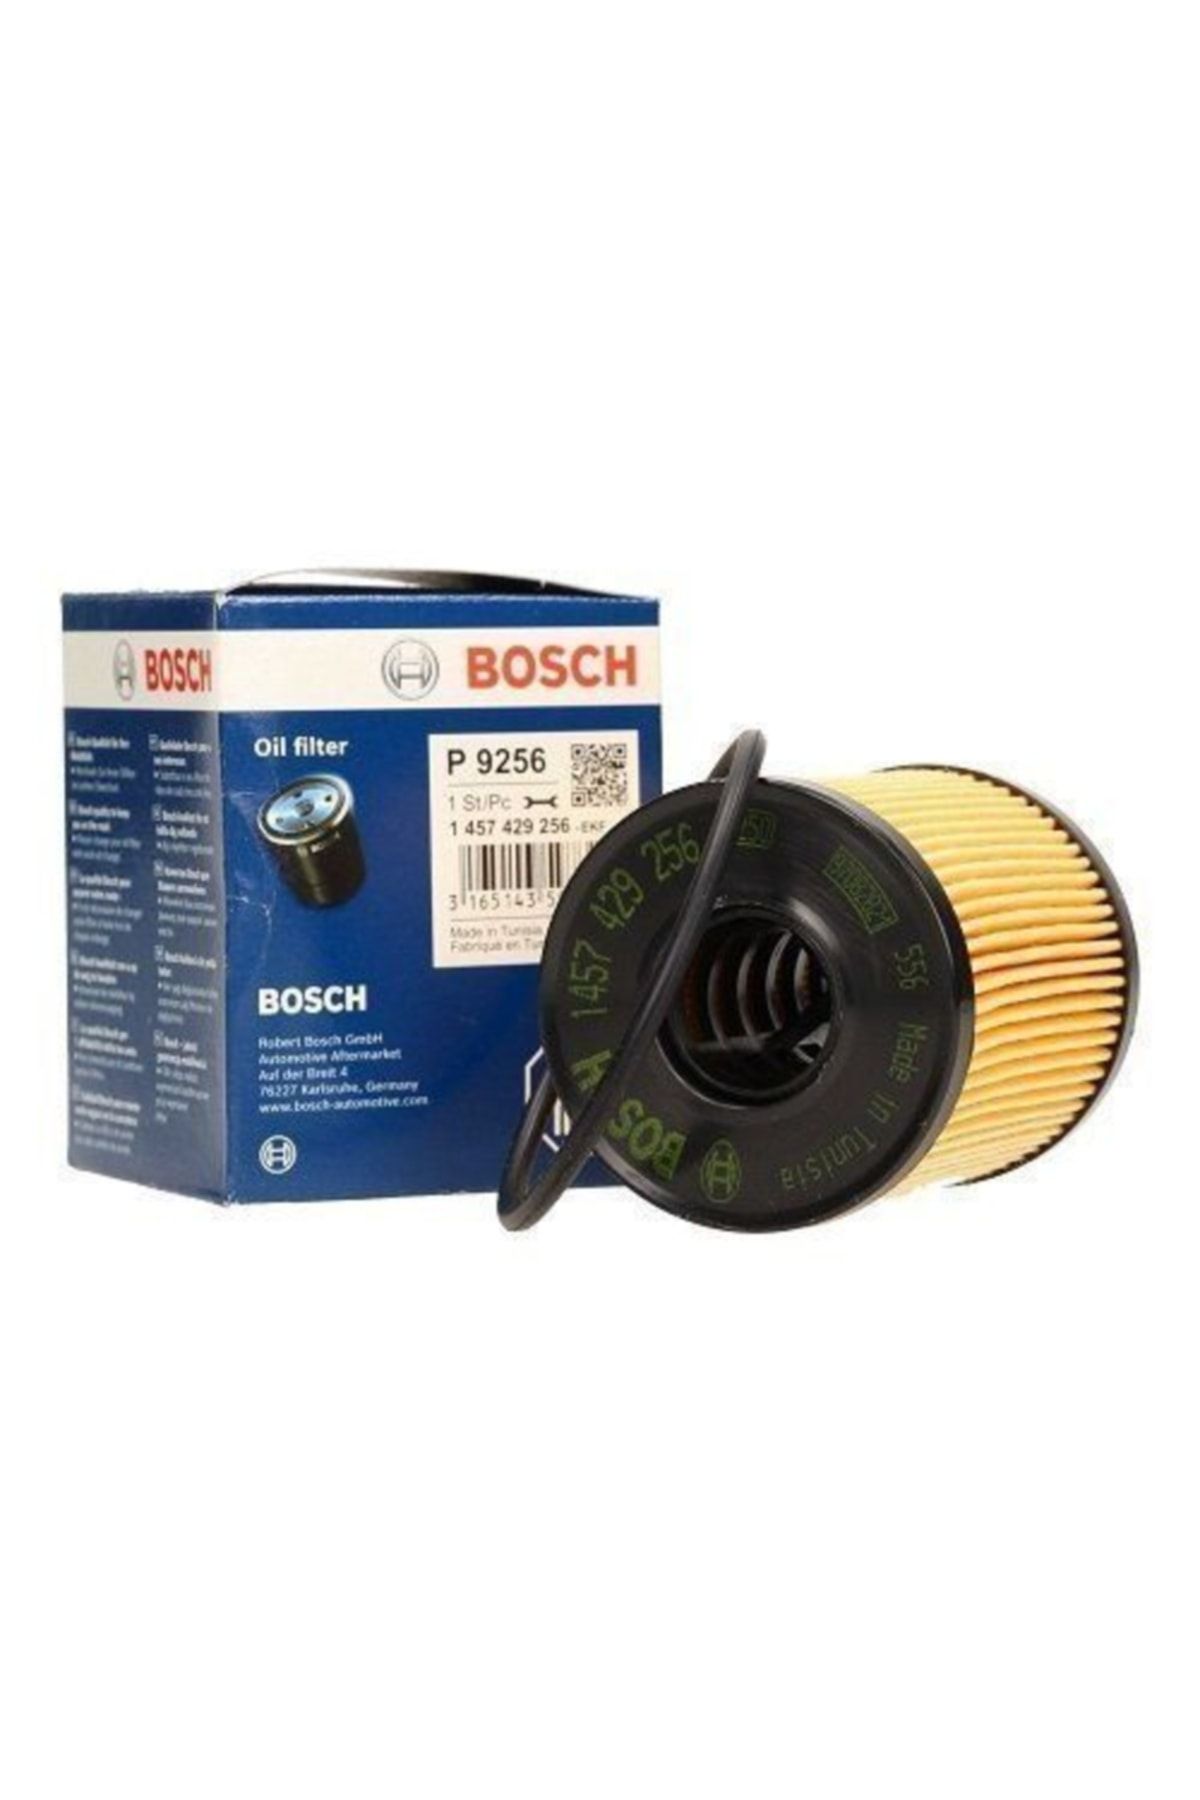 Bosch Opel Corsa C 1.3 Dizel Motor Yağ Filtresi (tırnaklı) Marka Bos-1457429256-2